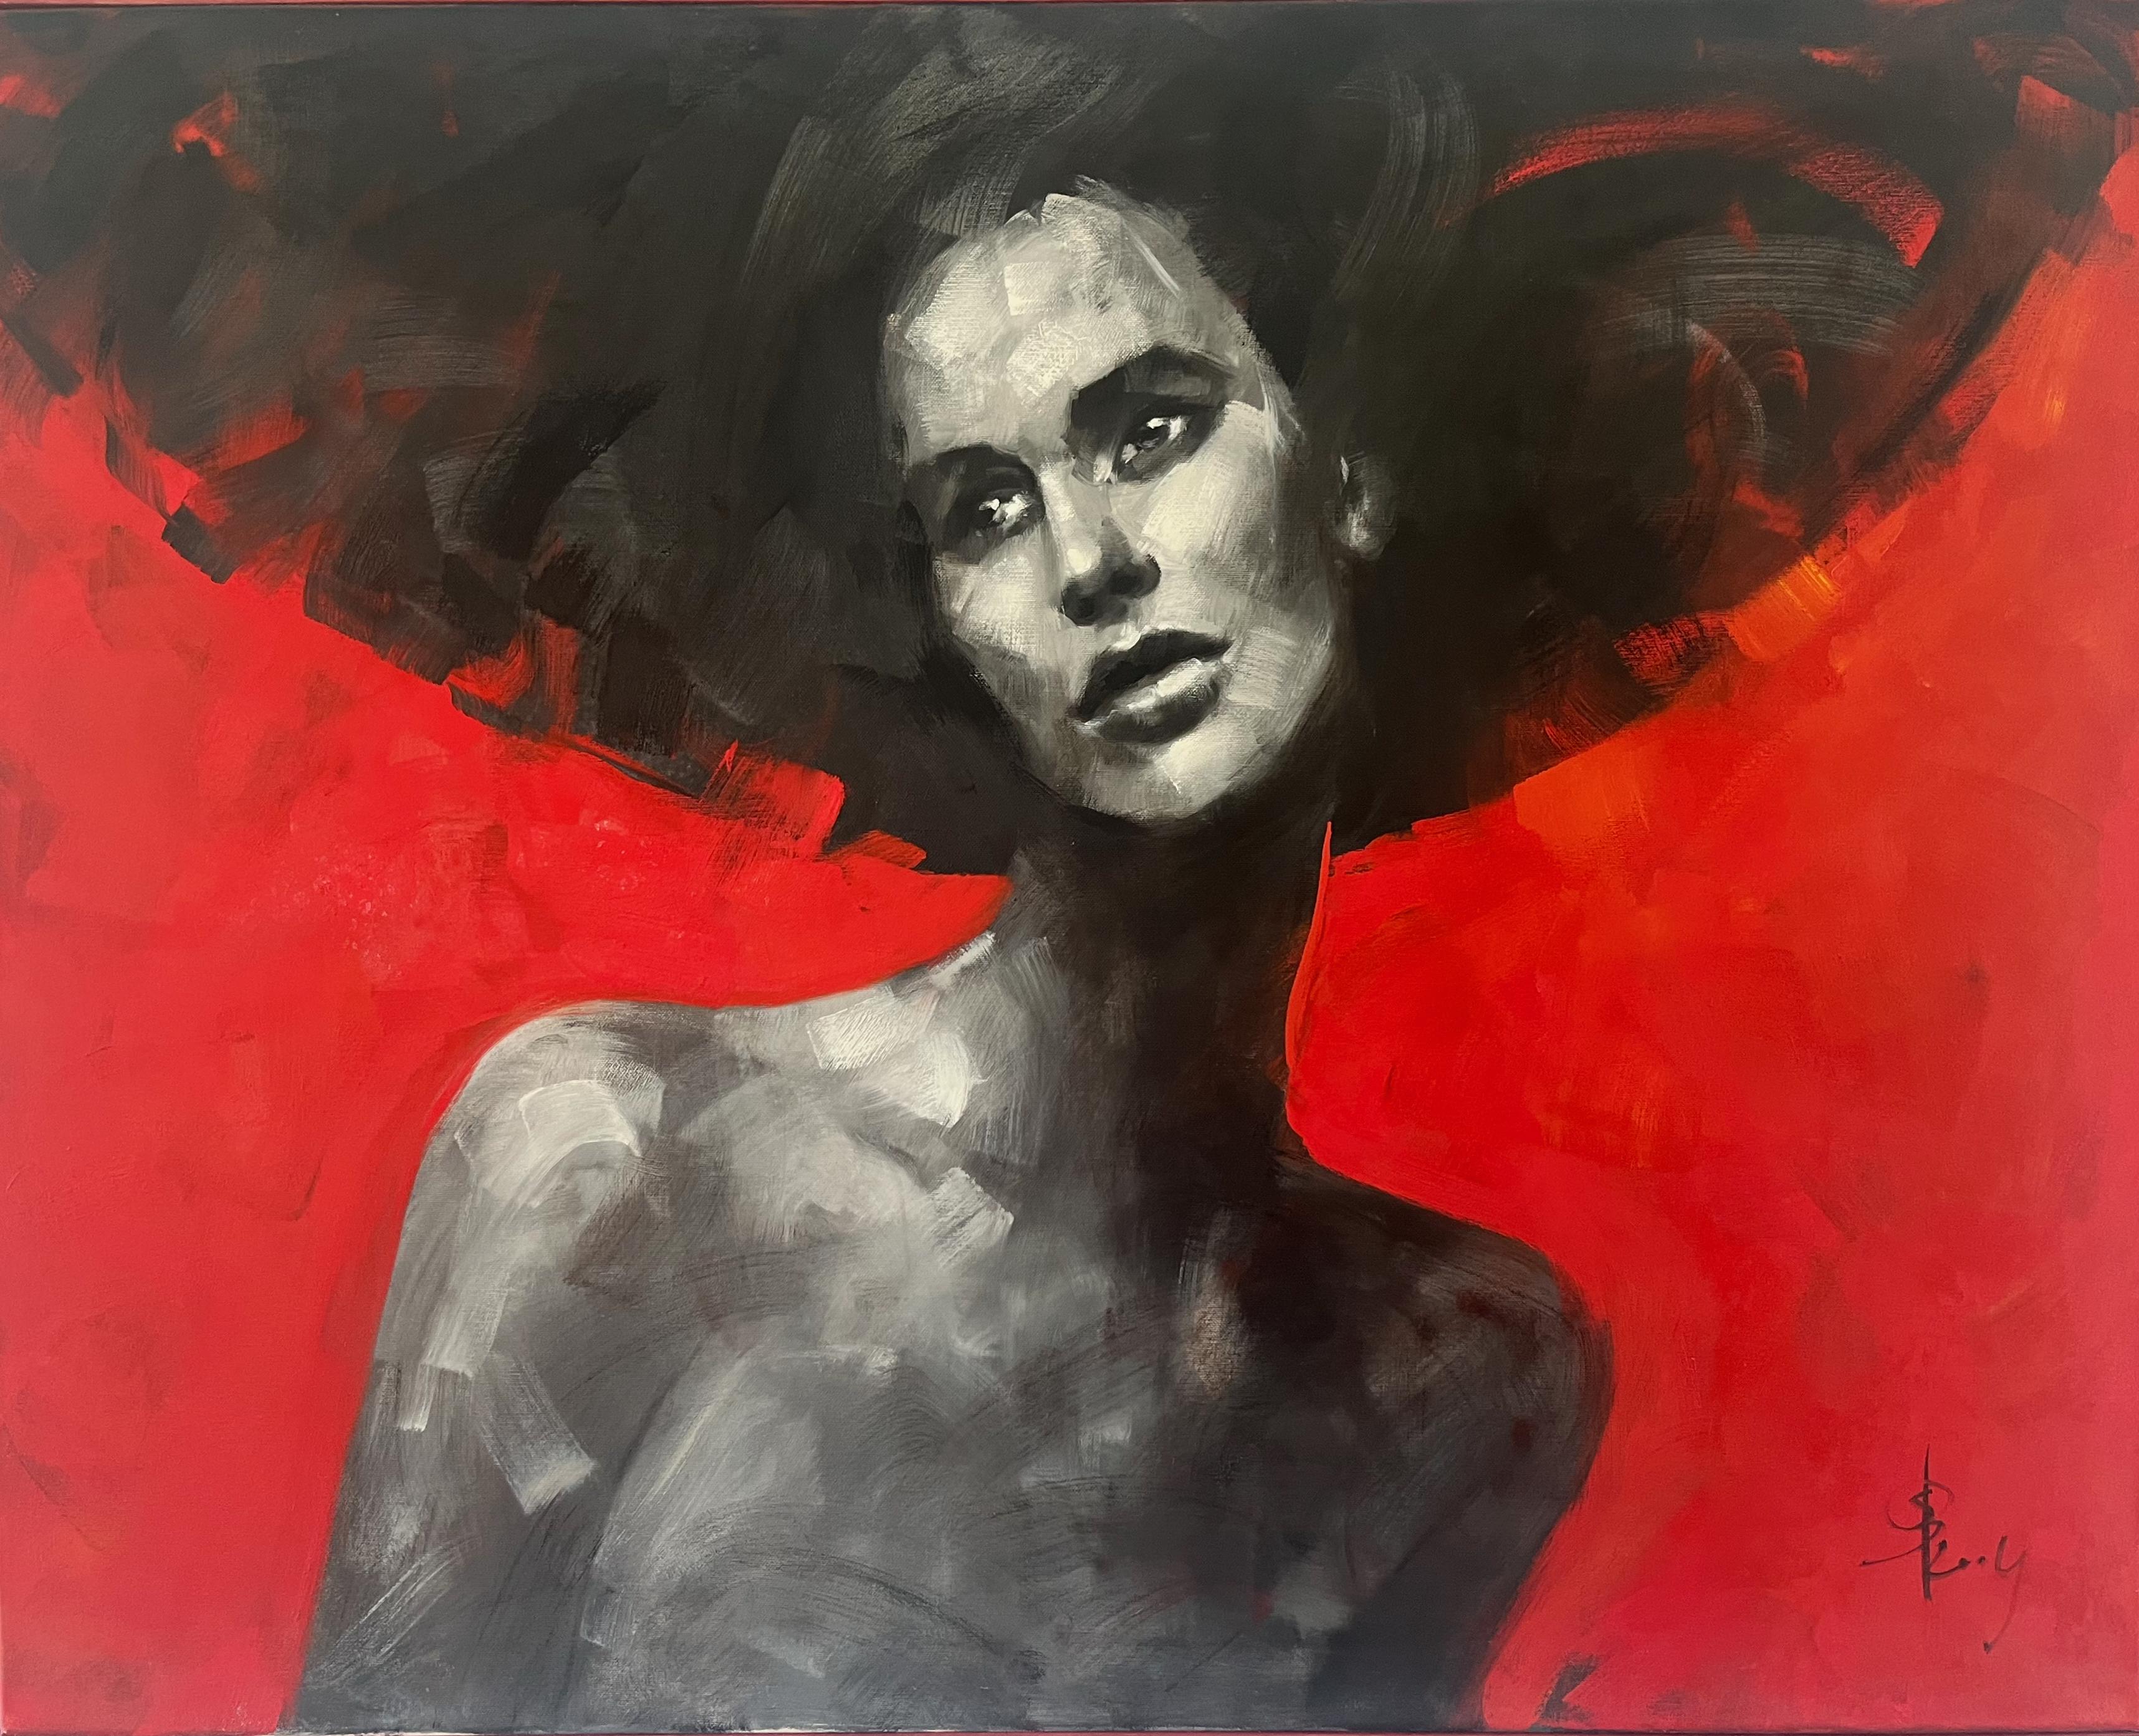 Renata Brzozowska Figurative Painting - Woman Portrait On Red Background - Modern Expressive Figurative Oil Painting